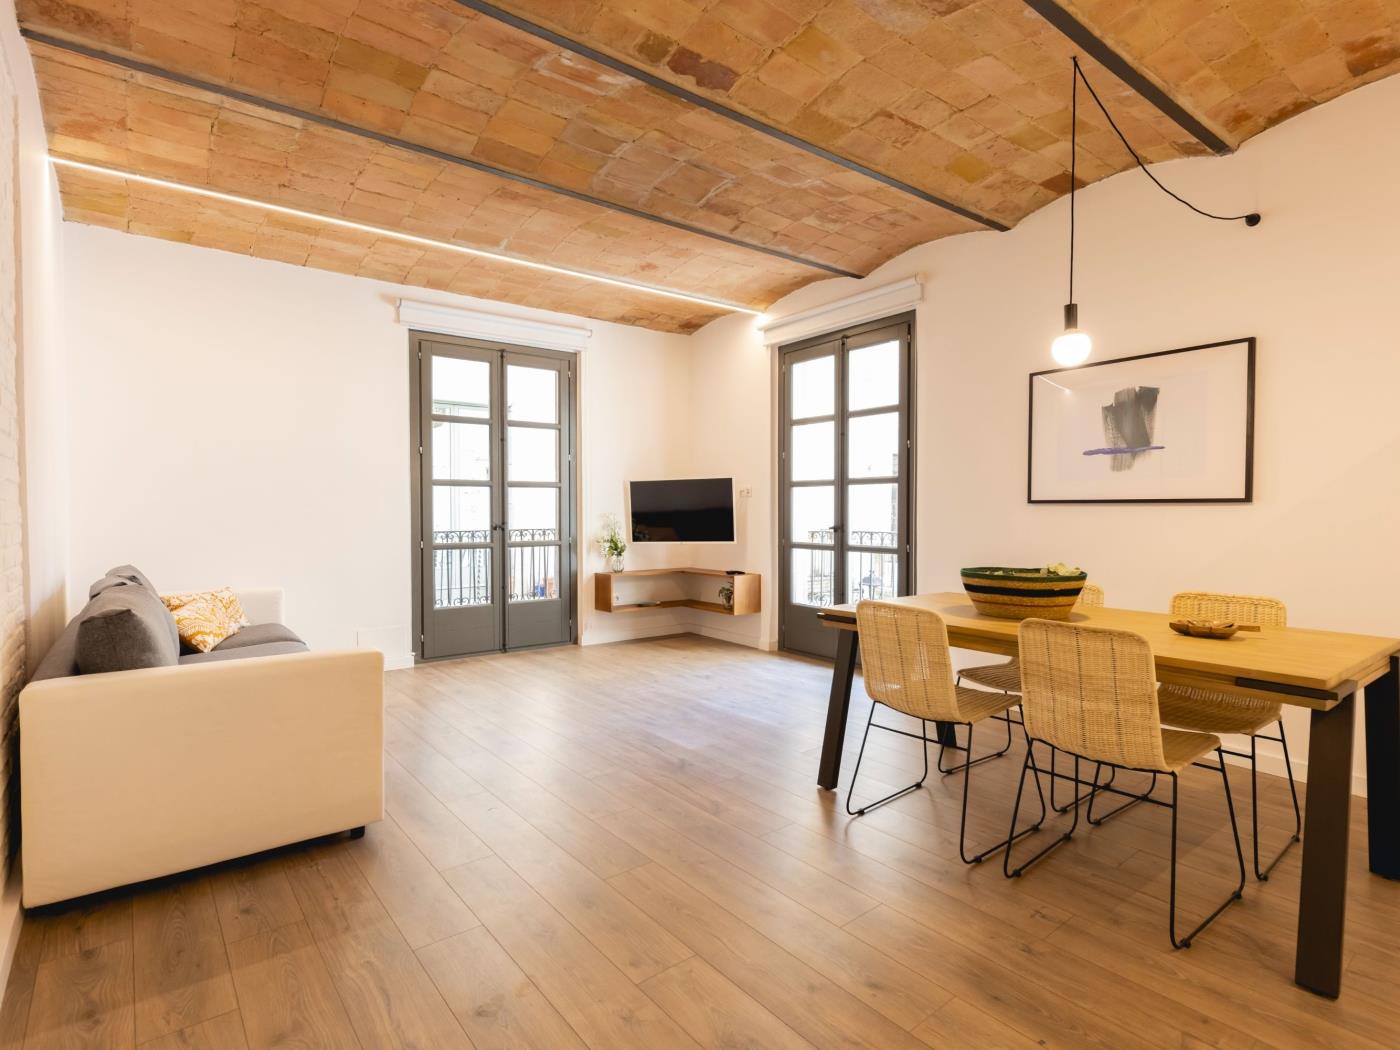 Bravissimo Entresol B, holiday apartment in Girona in Girona